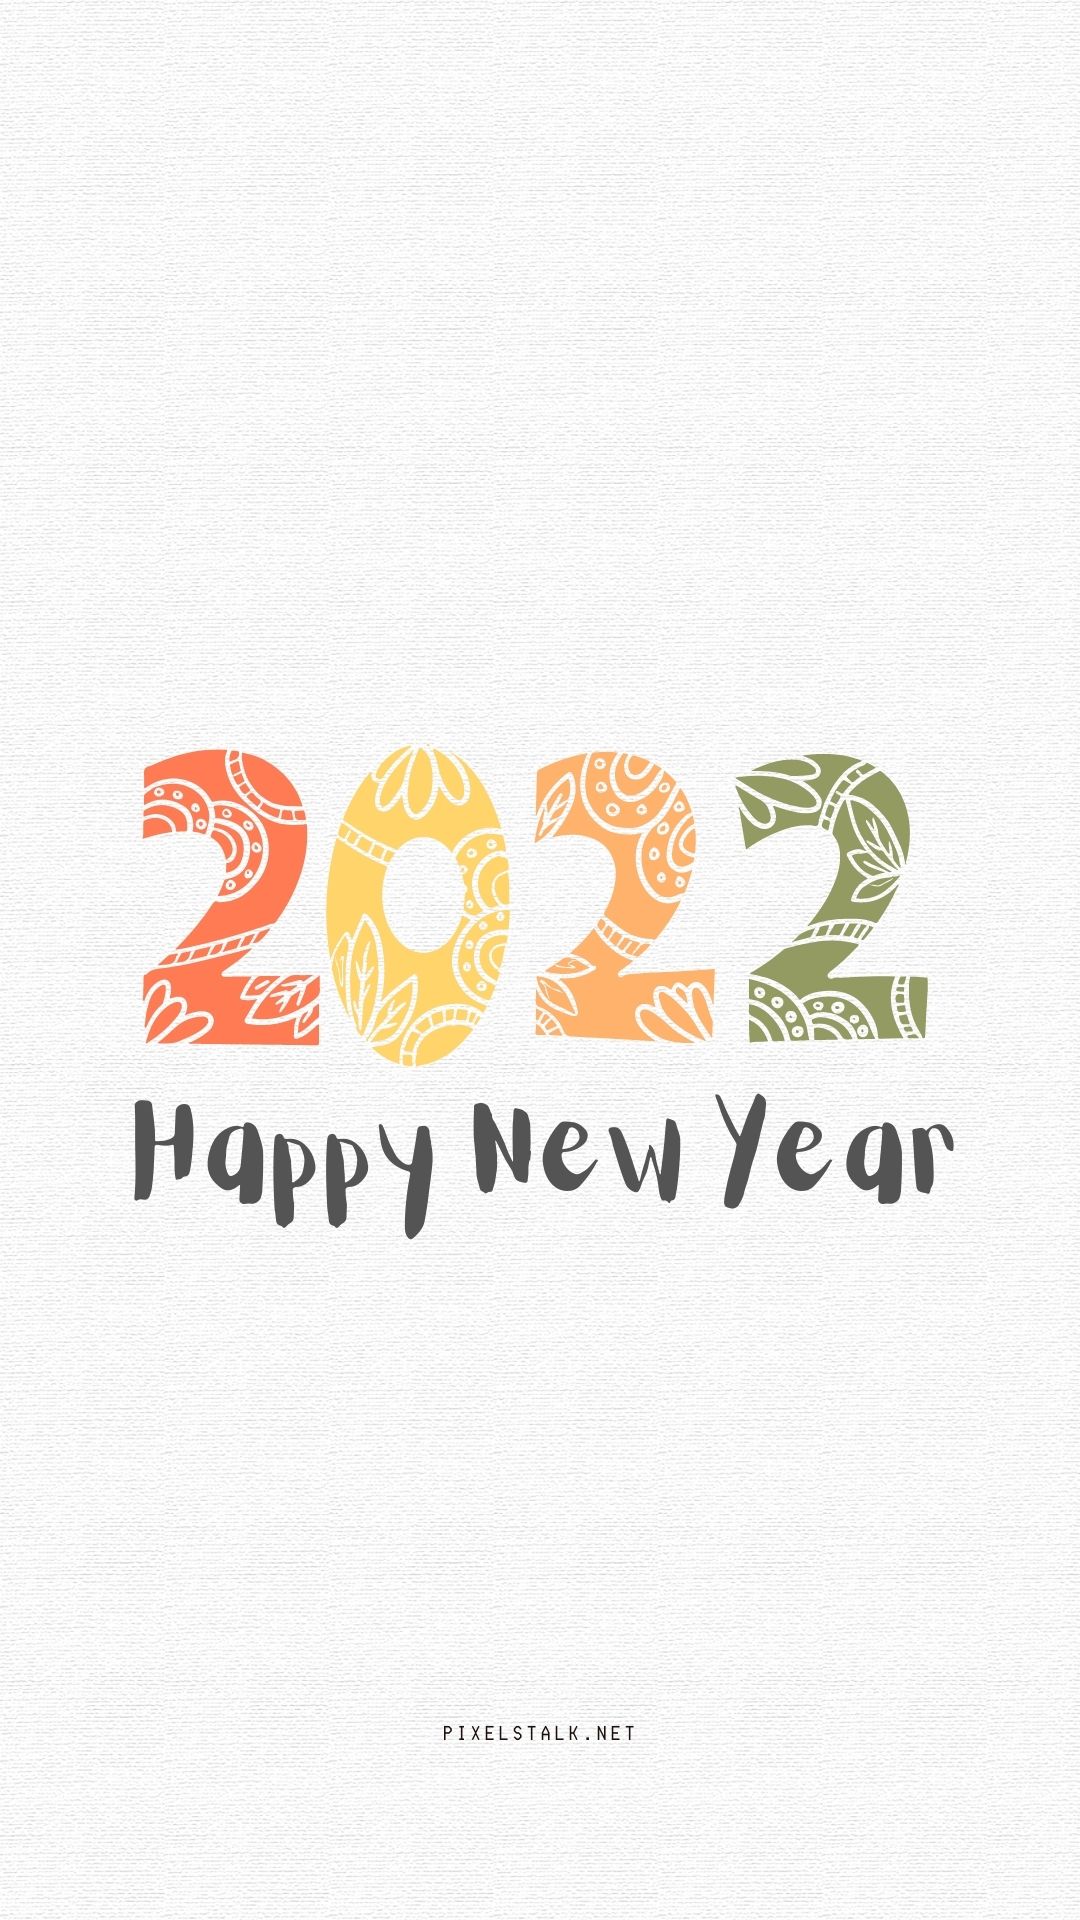 Happy New Year 2023 Wallpaper